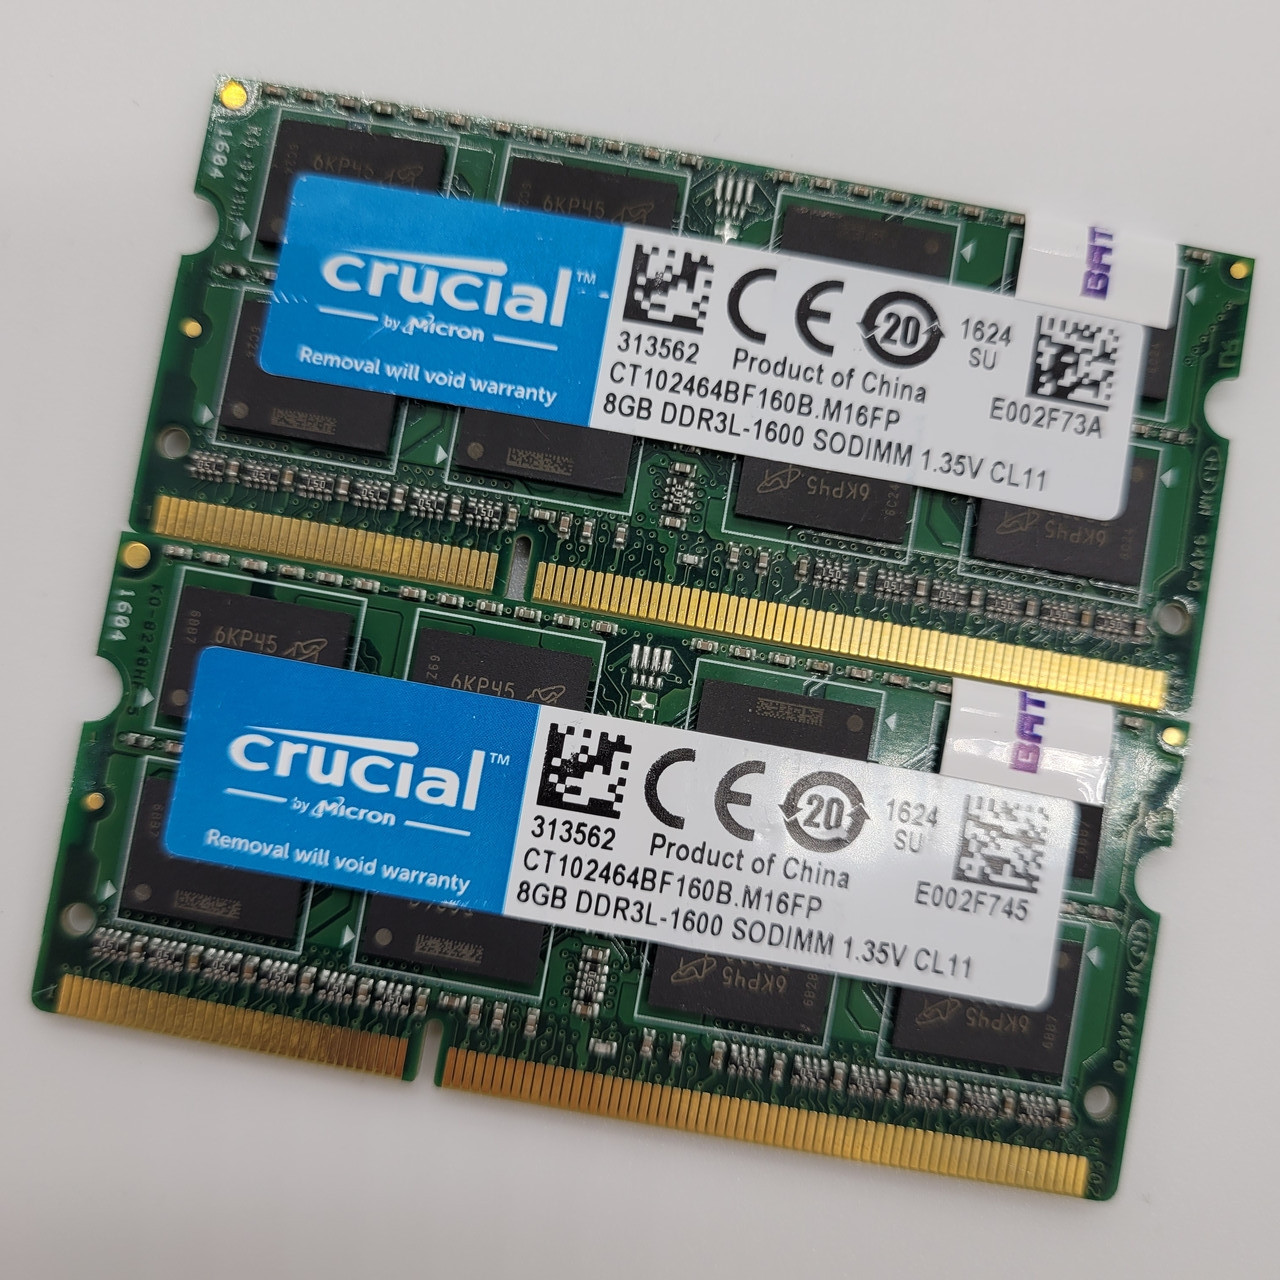 Пара оперативної пам'яті для ноутбука Crucial SODIMM DDR3L 16Gb (8Gb+8Gb) 1600MHz 12800s CL11 (CT102464BF160B.M16FP) Б/В, фото 1